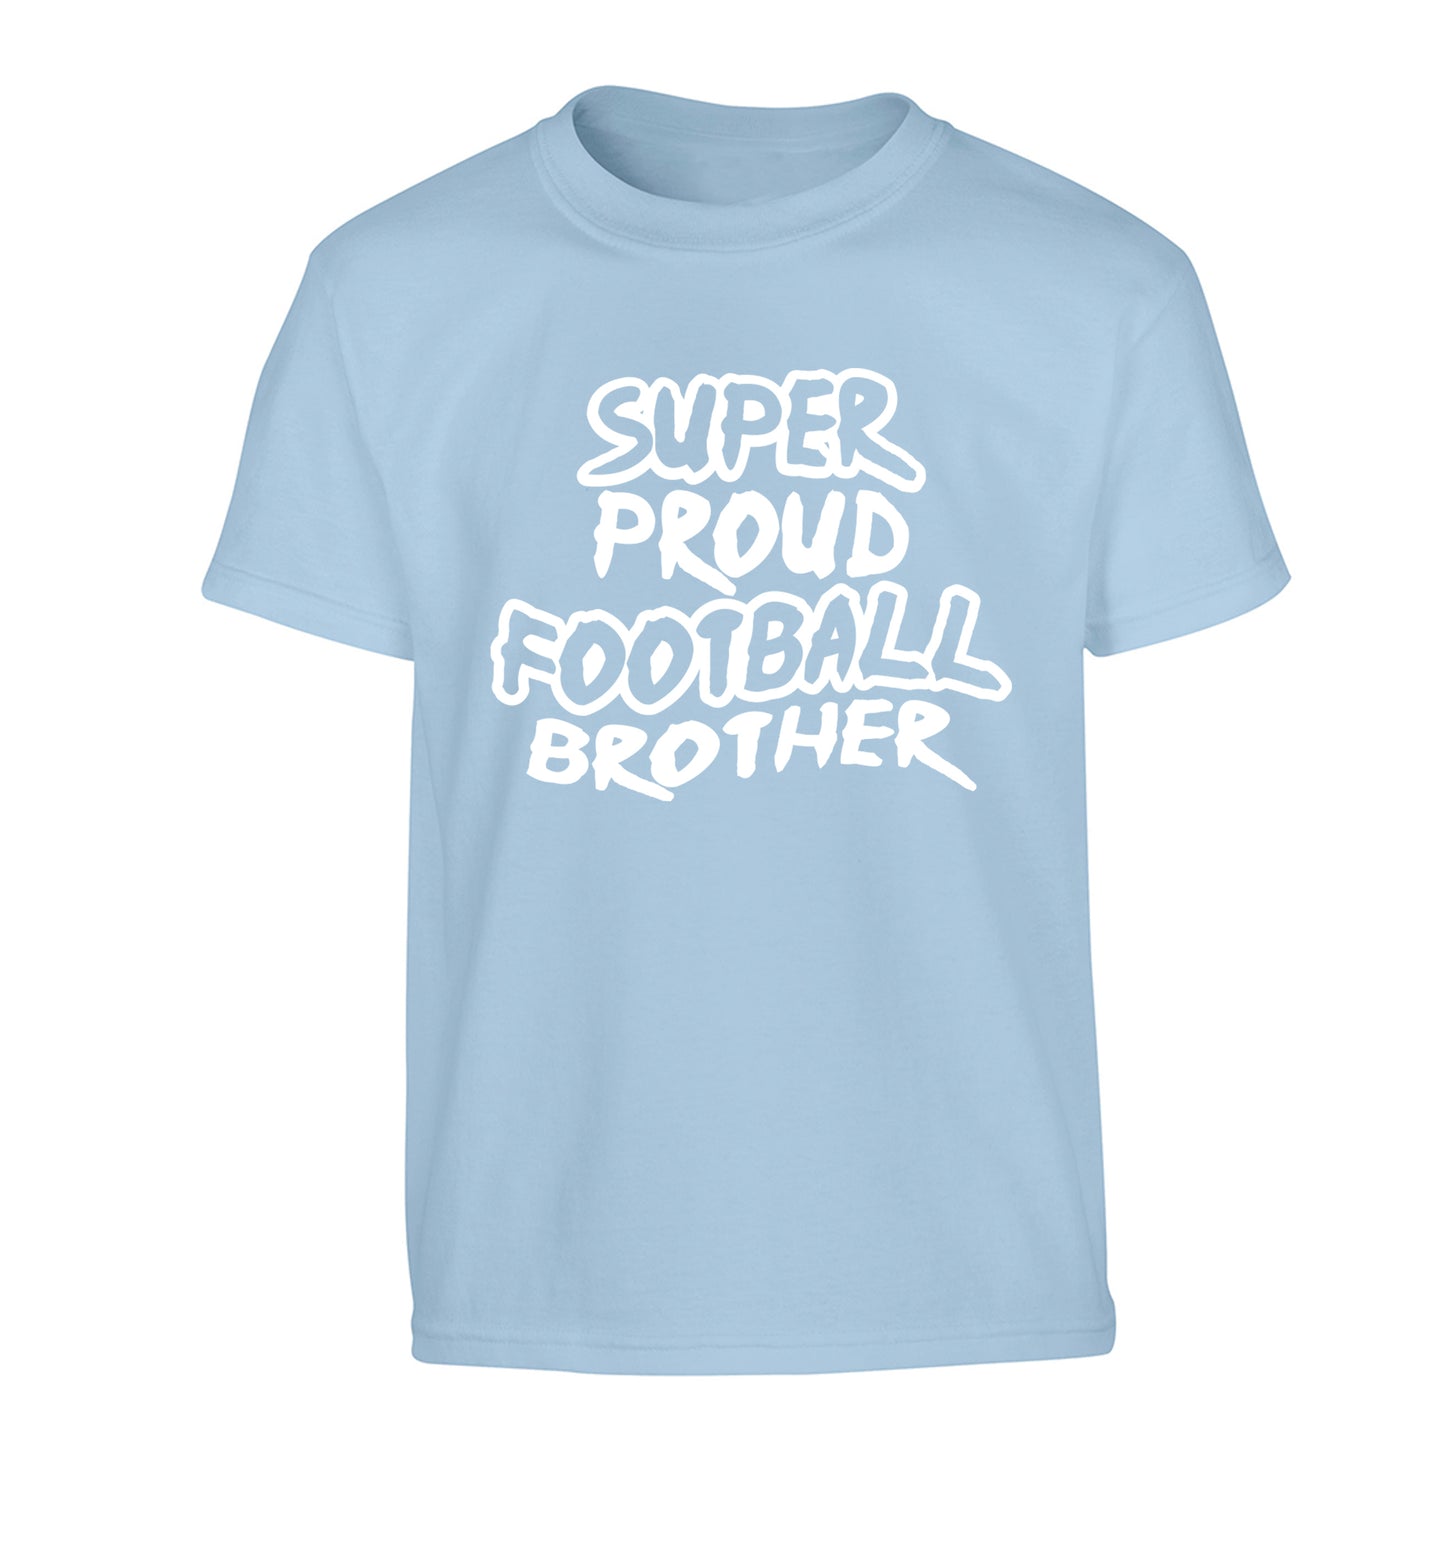 Super proud football brother Children's light blue Tshirt 12-14 Years